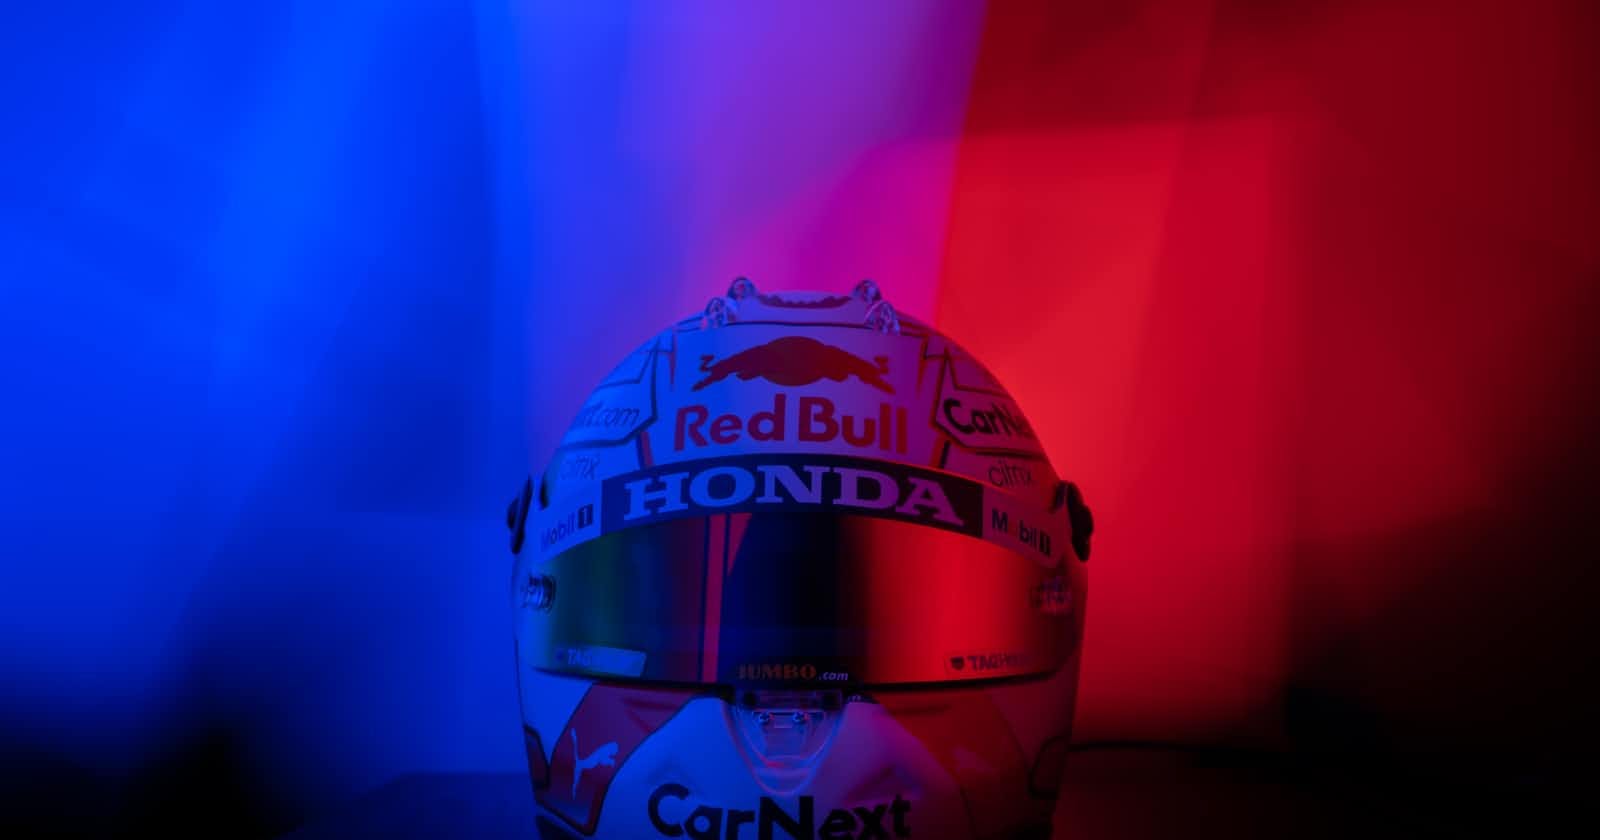 Website Performance of Each Formula 1 Team